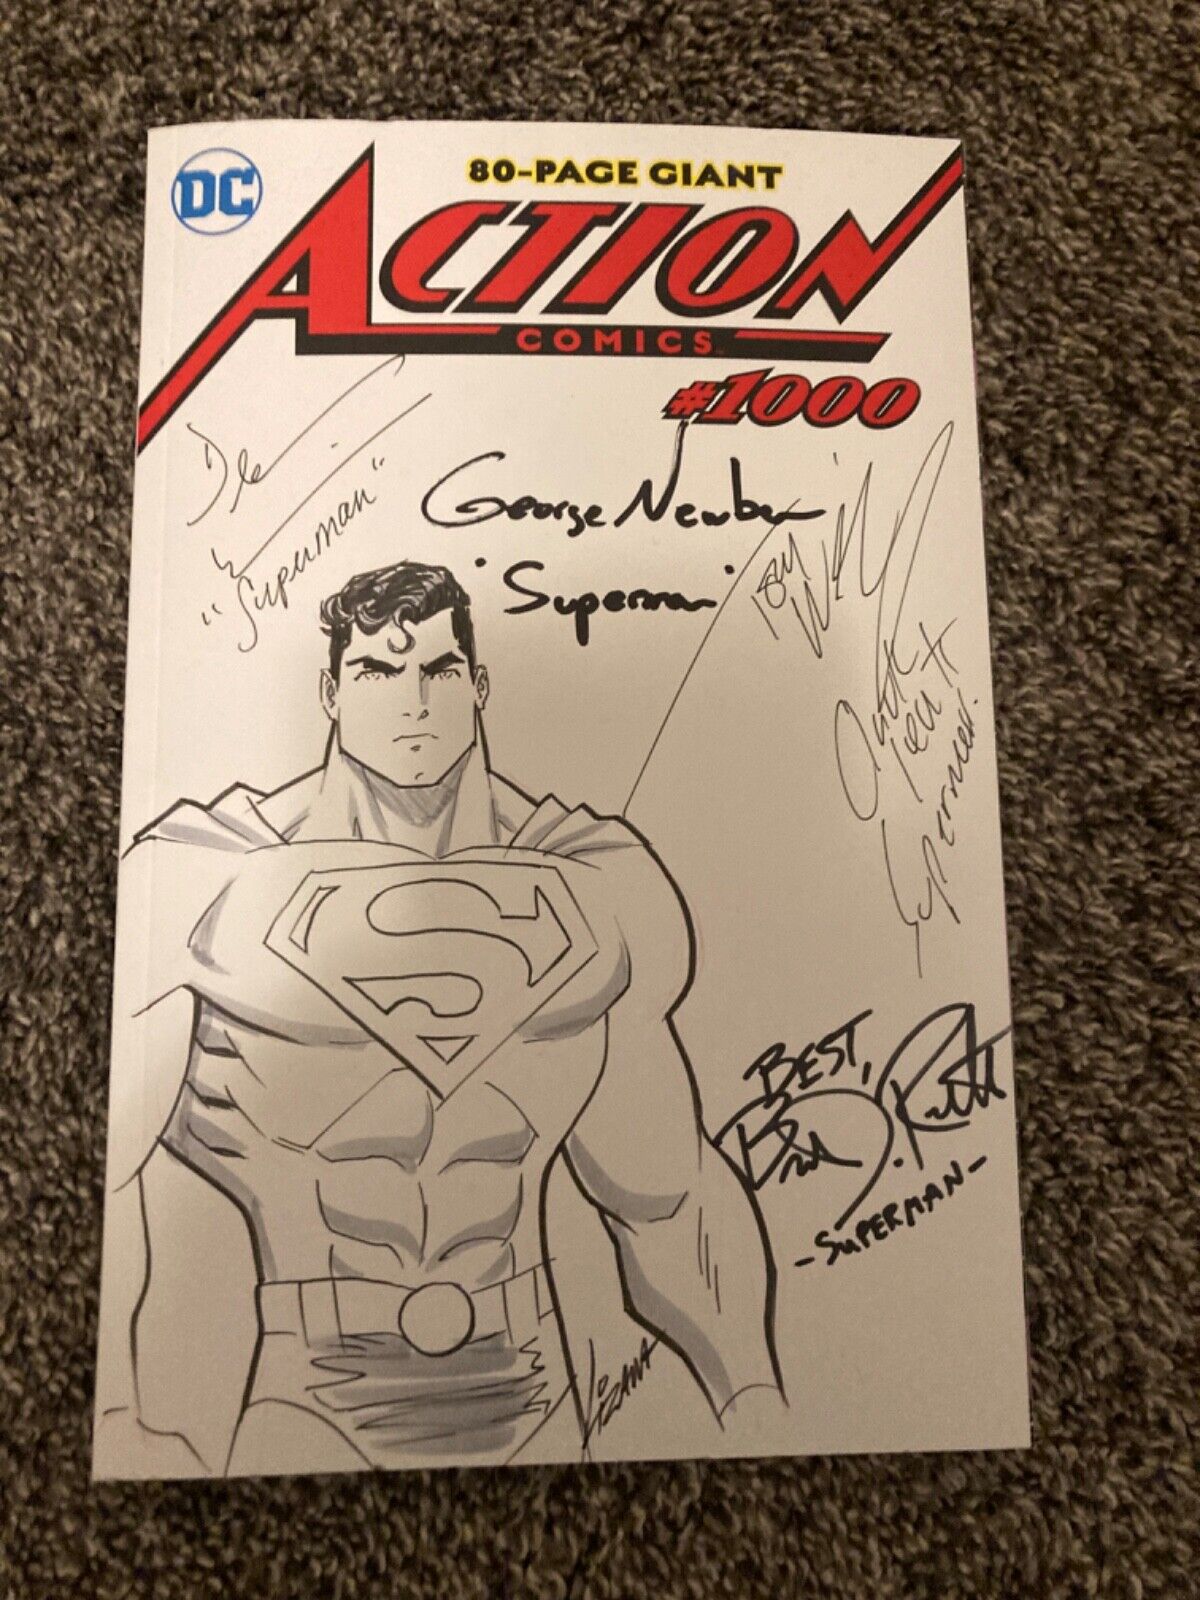 Autographed Action Comics #1000 w/ custom artwork